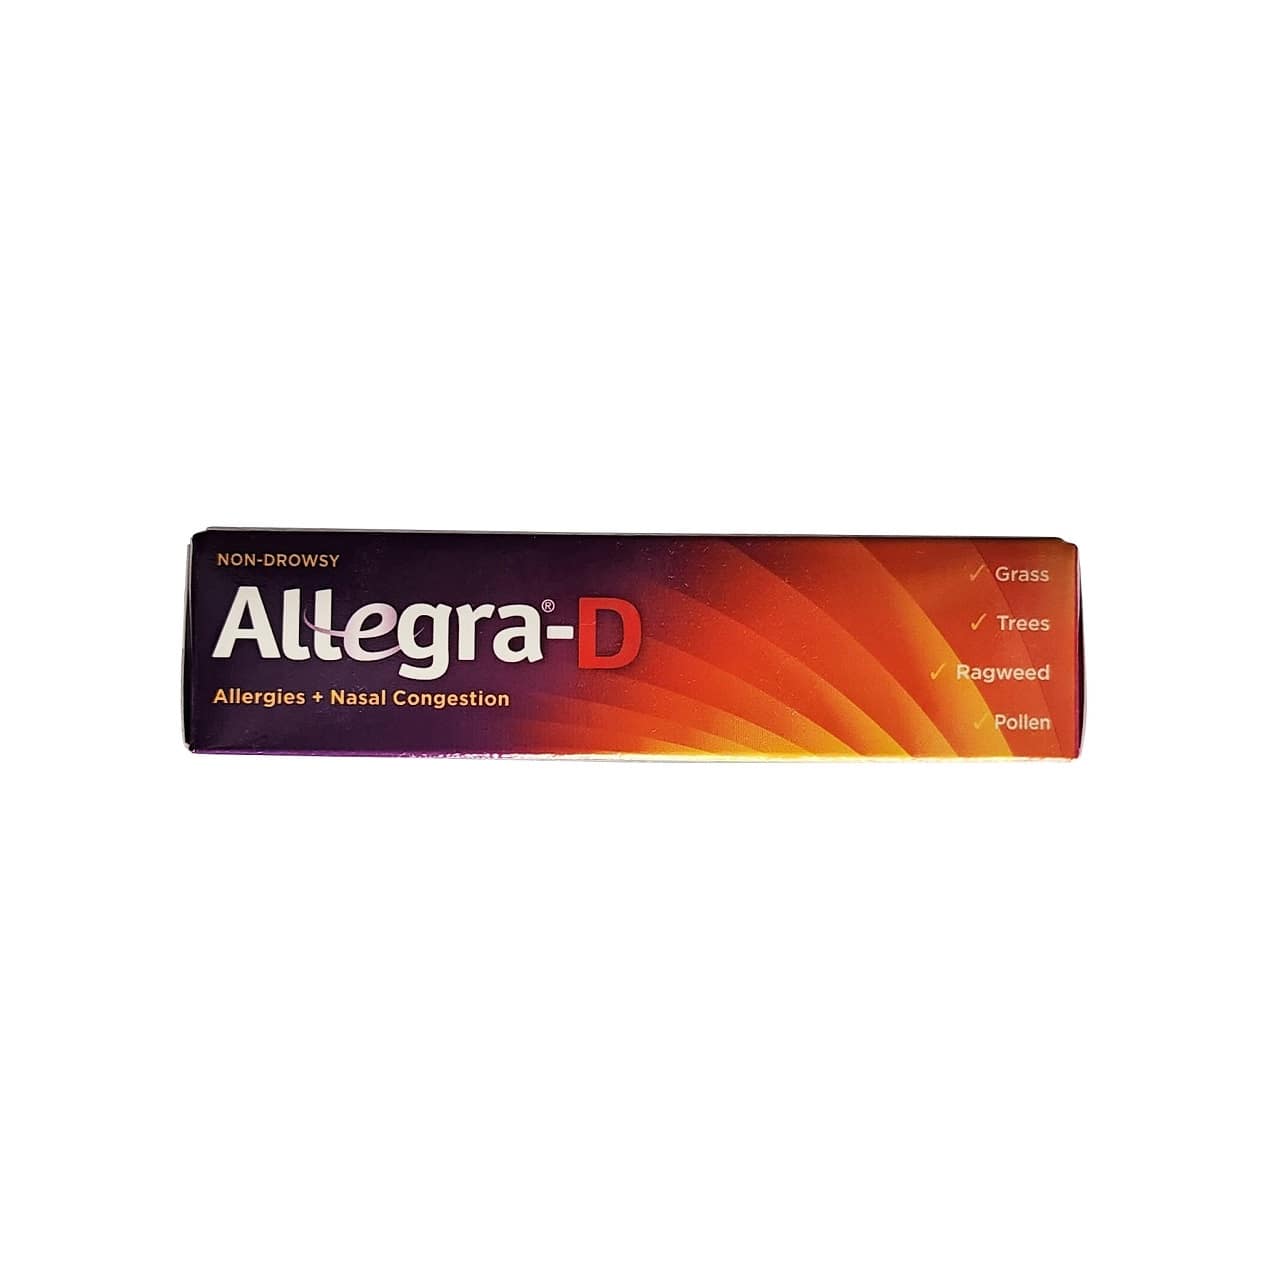 Side for Allegra-D Non Drowsy Antihistamine + Nasal Decongestant (20 caplets) in English